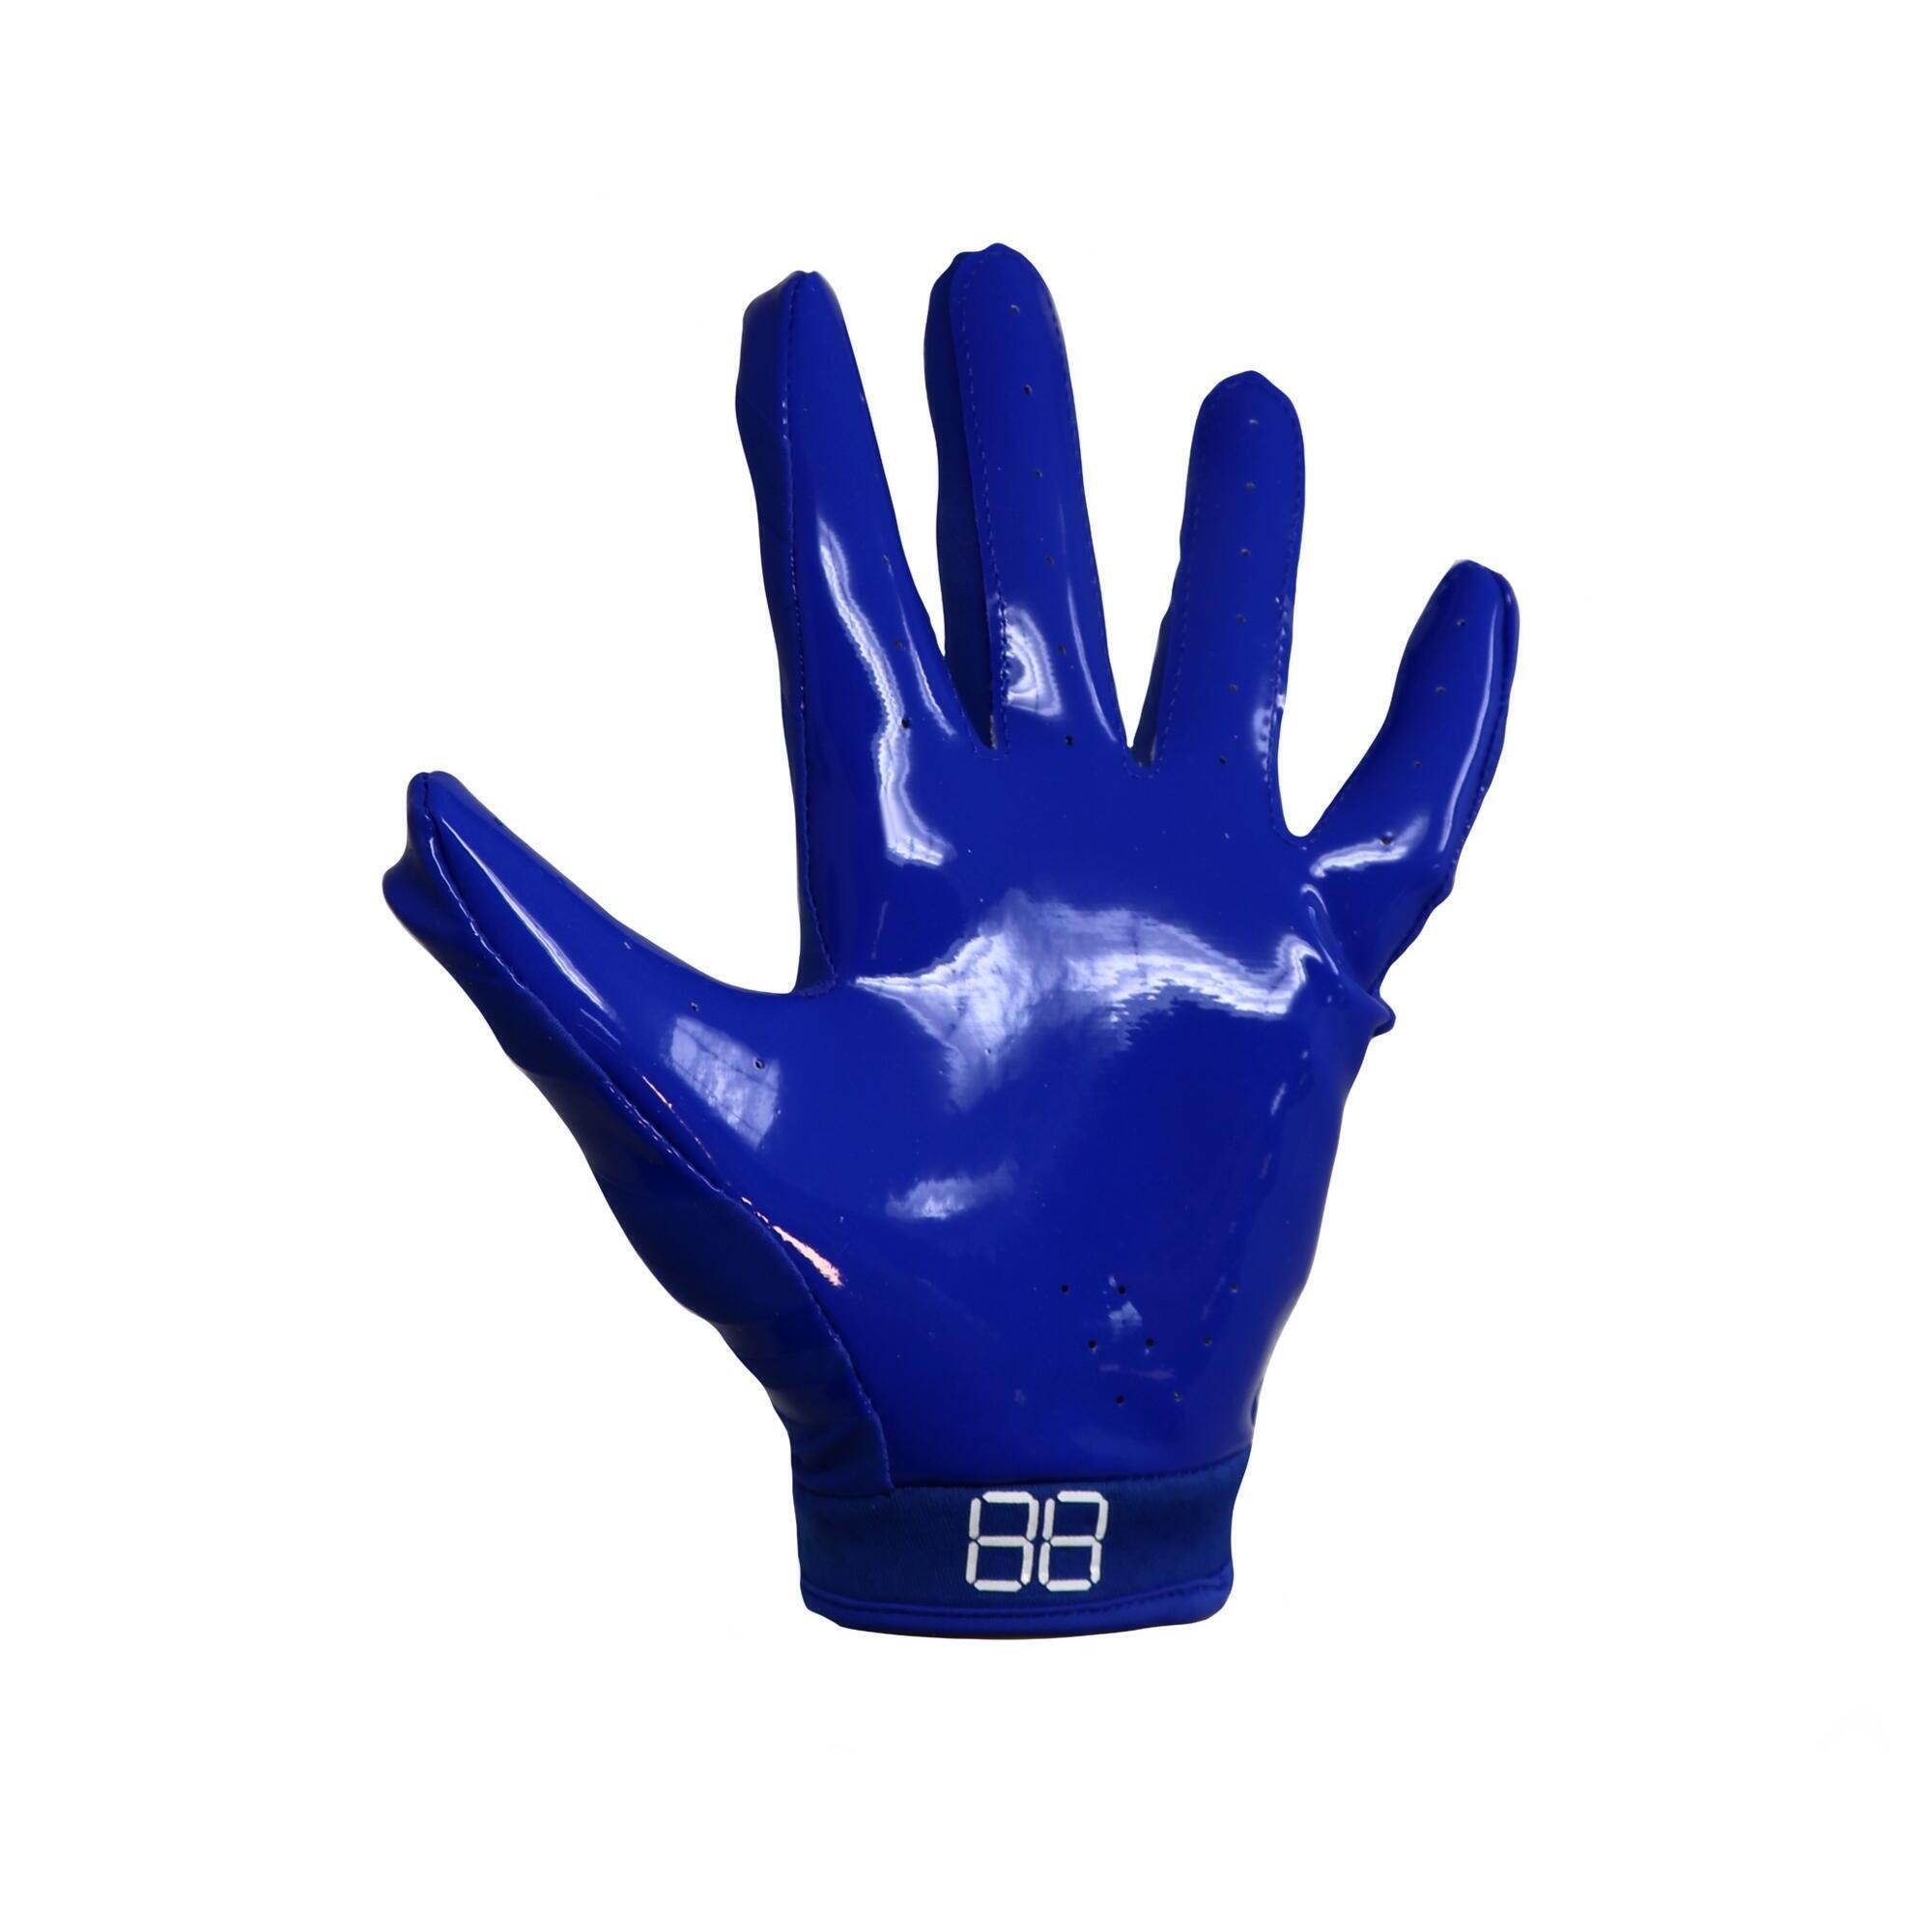  pro receiver american football gloves, RE,DB,RB, Blue FRG-03 5/5